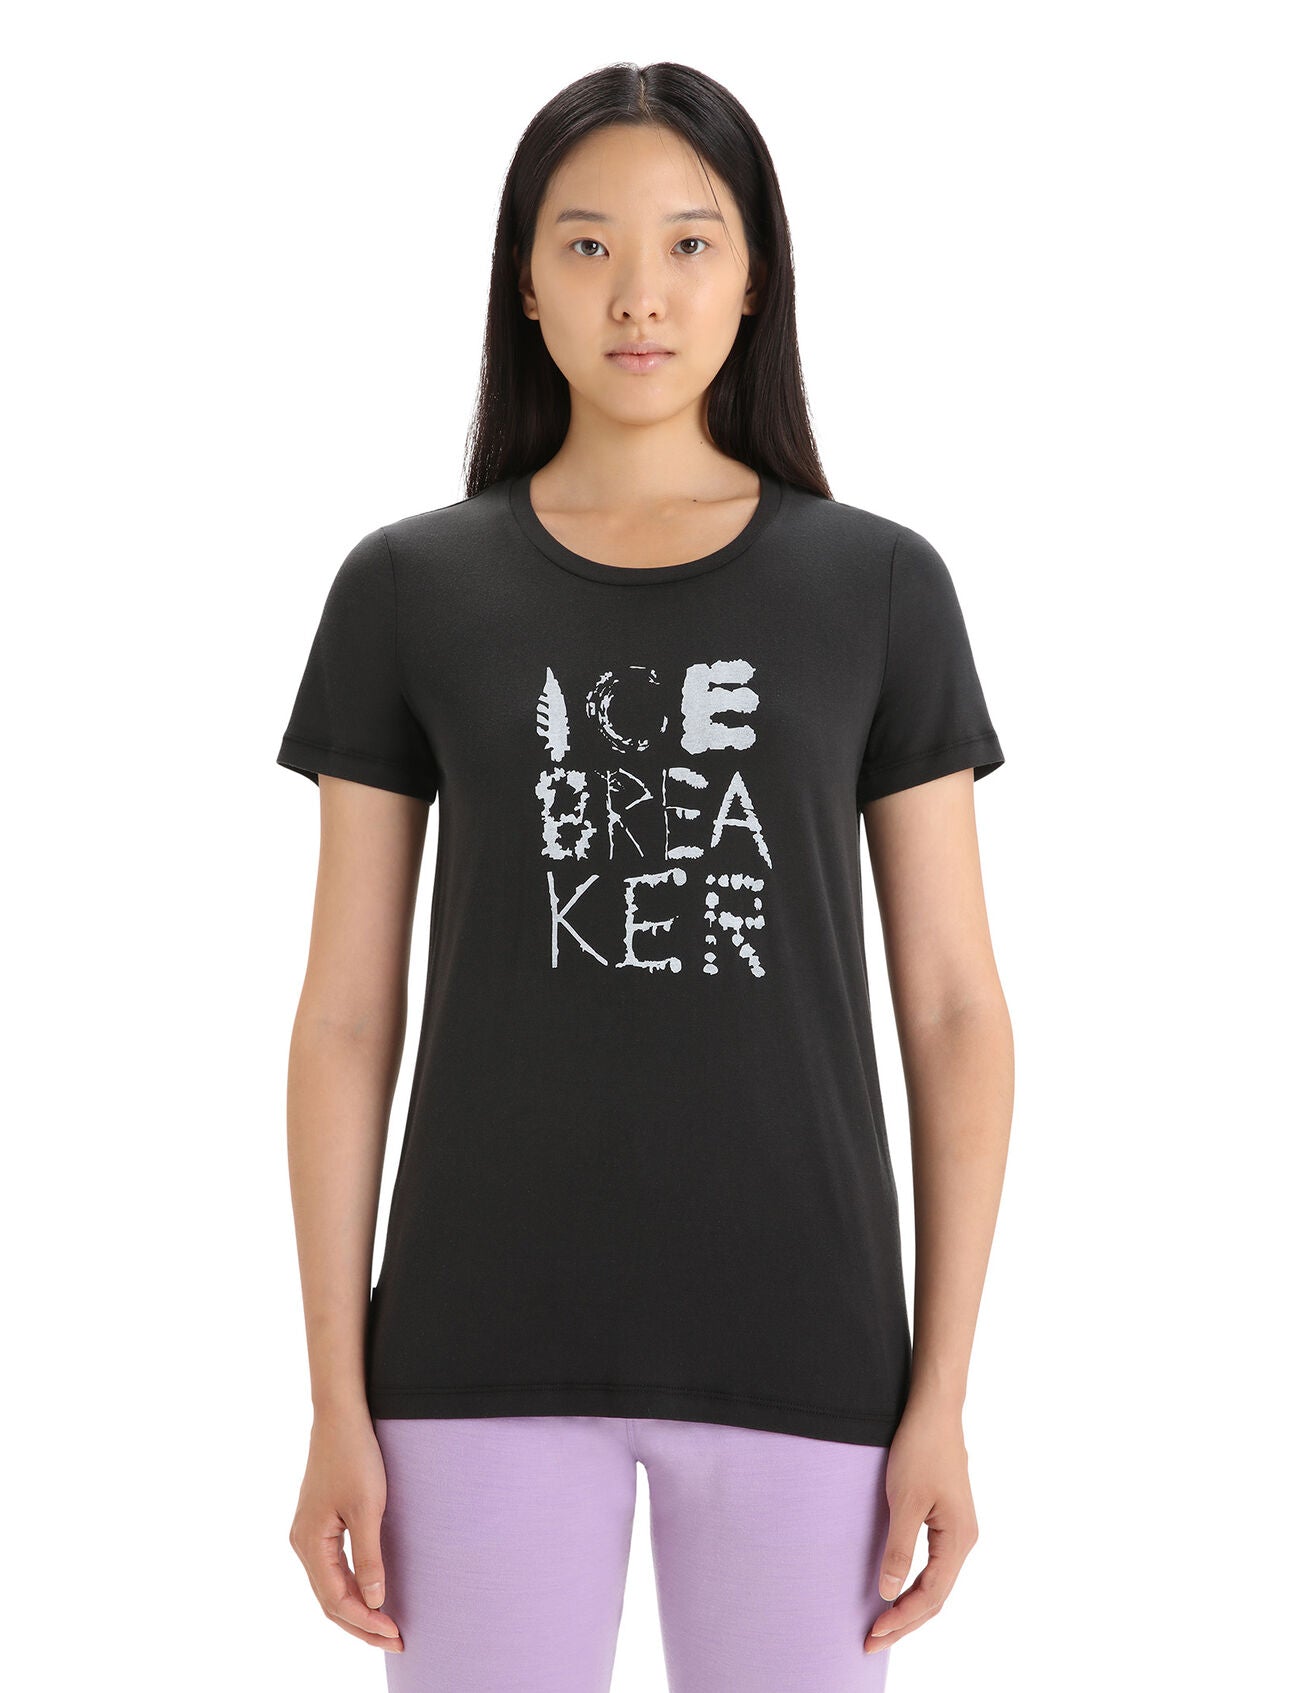 Icebreaker Women's Tencel Cotton Short Sleeve T-Shirt